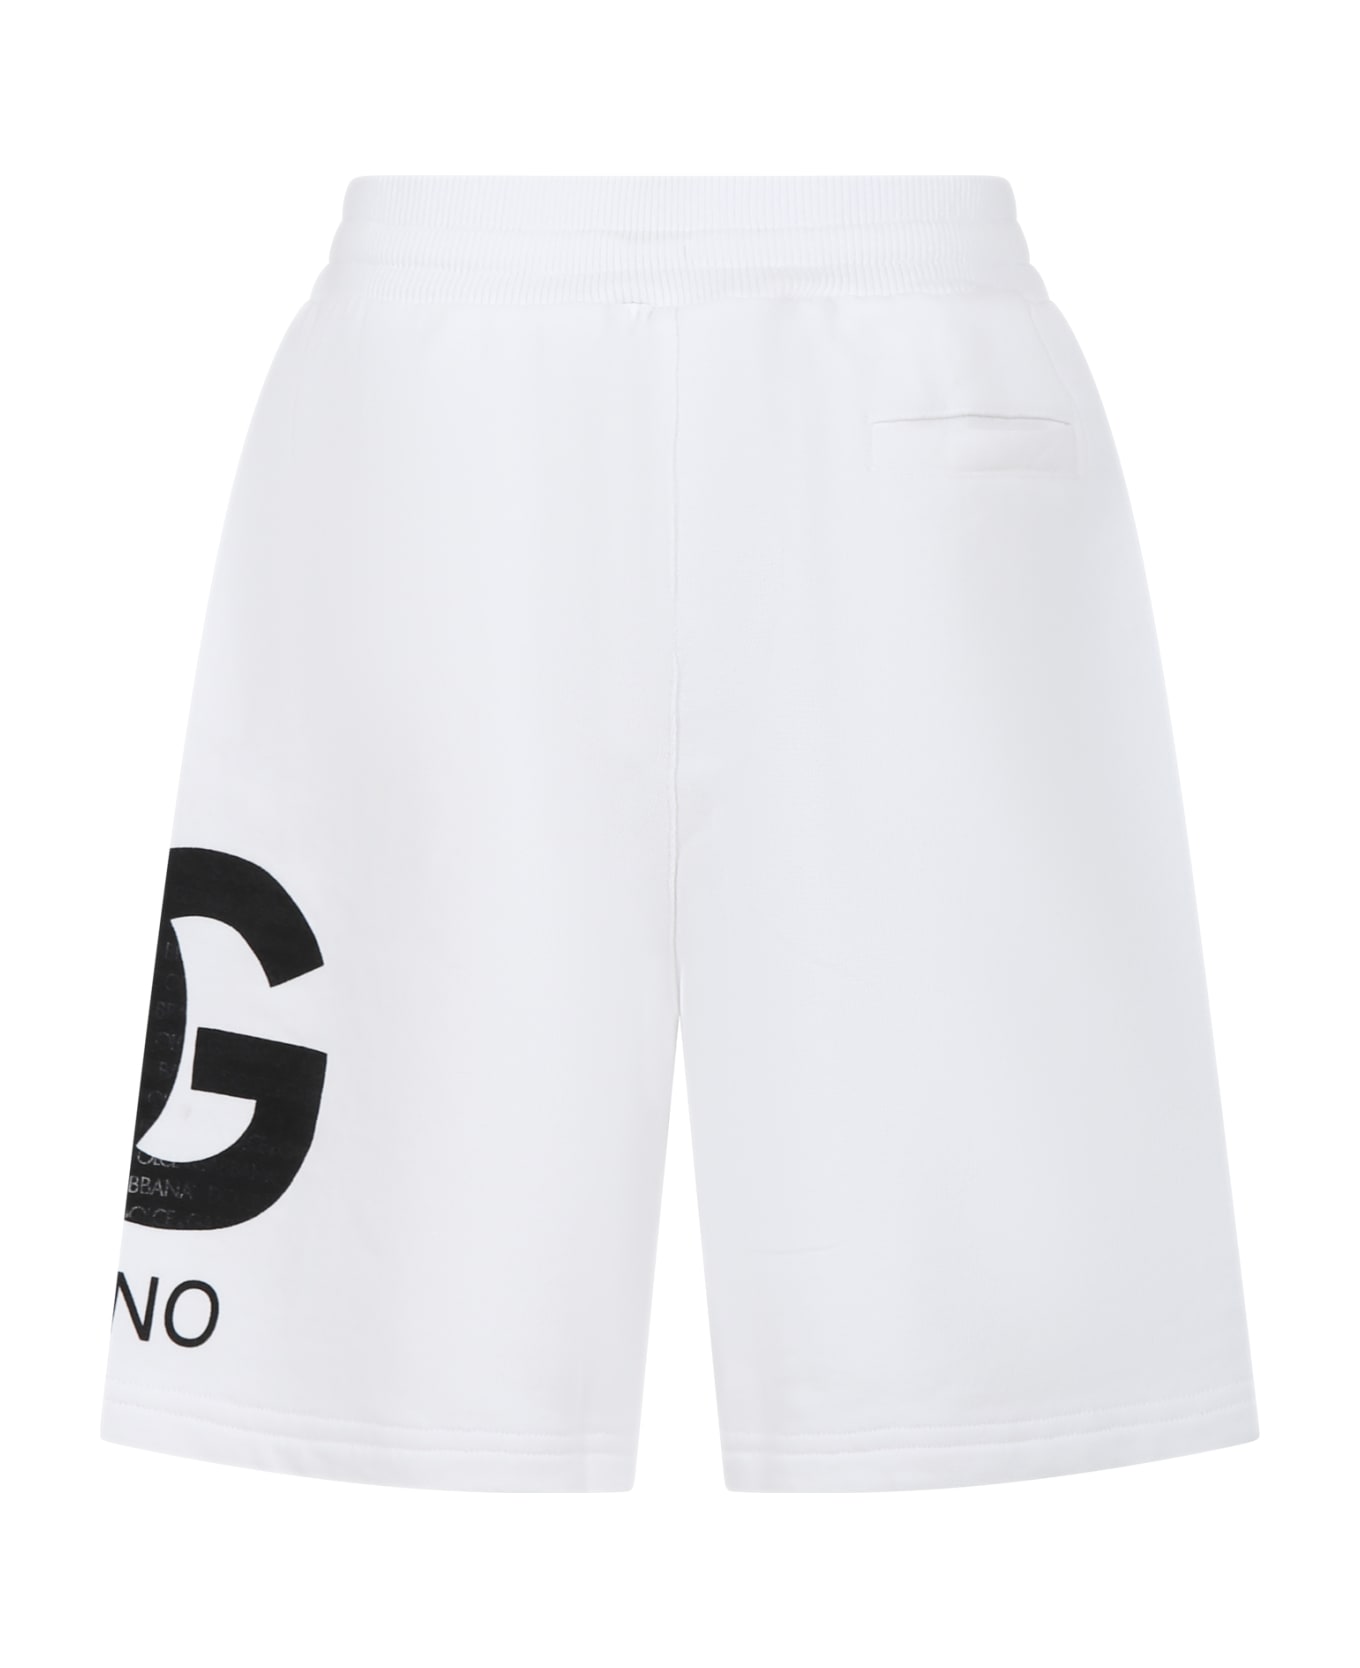 Dolce & Gabbana White Shorts For Boy With Iconic Monogram - White